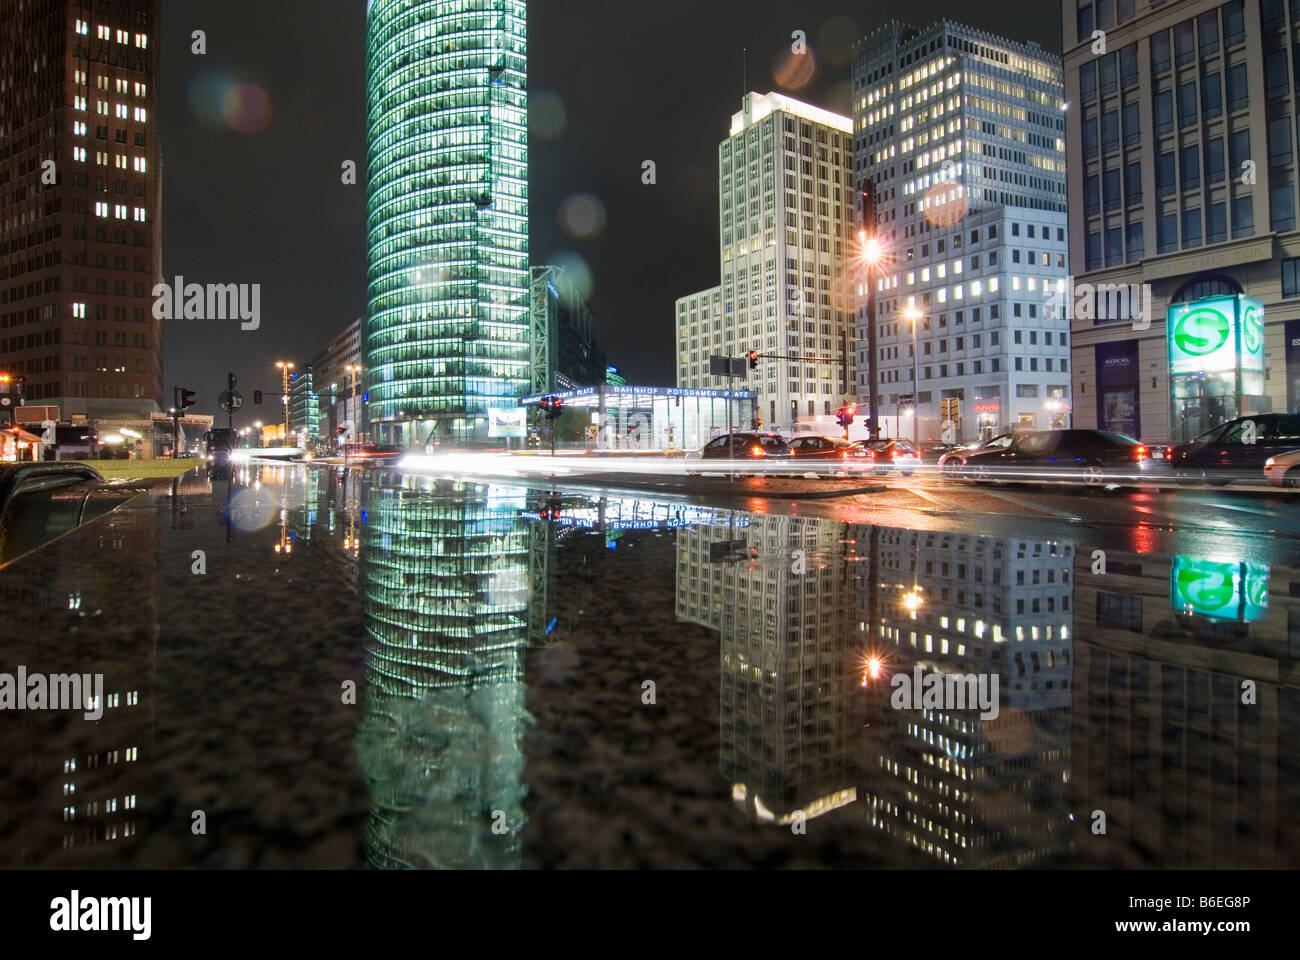 Berlin Potsdamer Platz by night Stock Photo